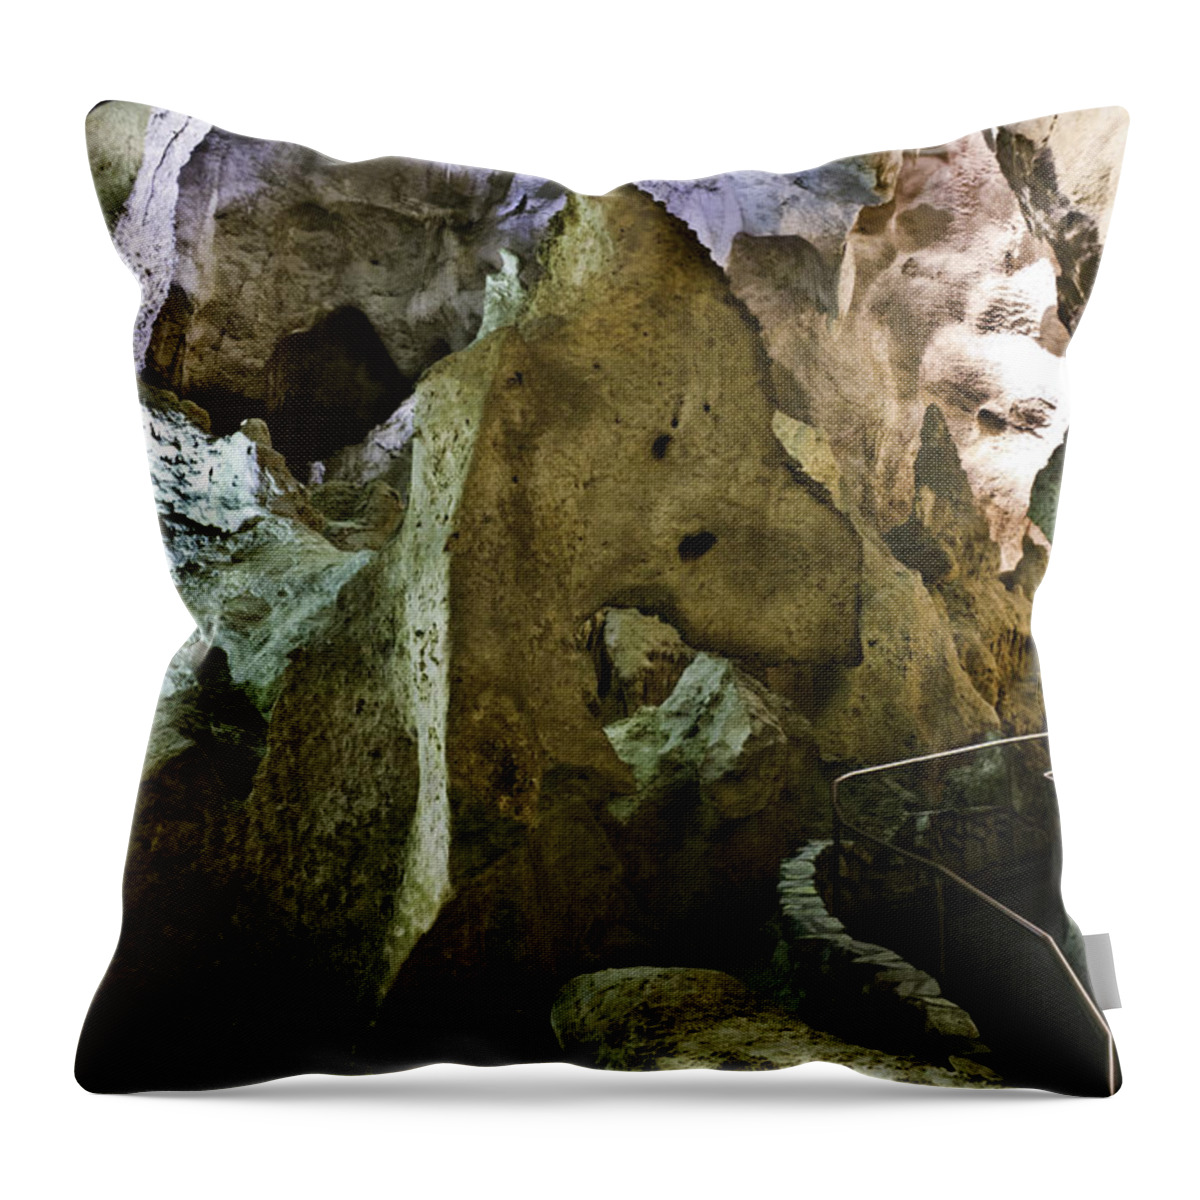 Carlsbad Cavern Throw Pillow featuring the digital art Dragon Shape in Carlsbdad Cavern by Georgianne Giese